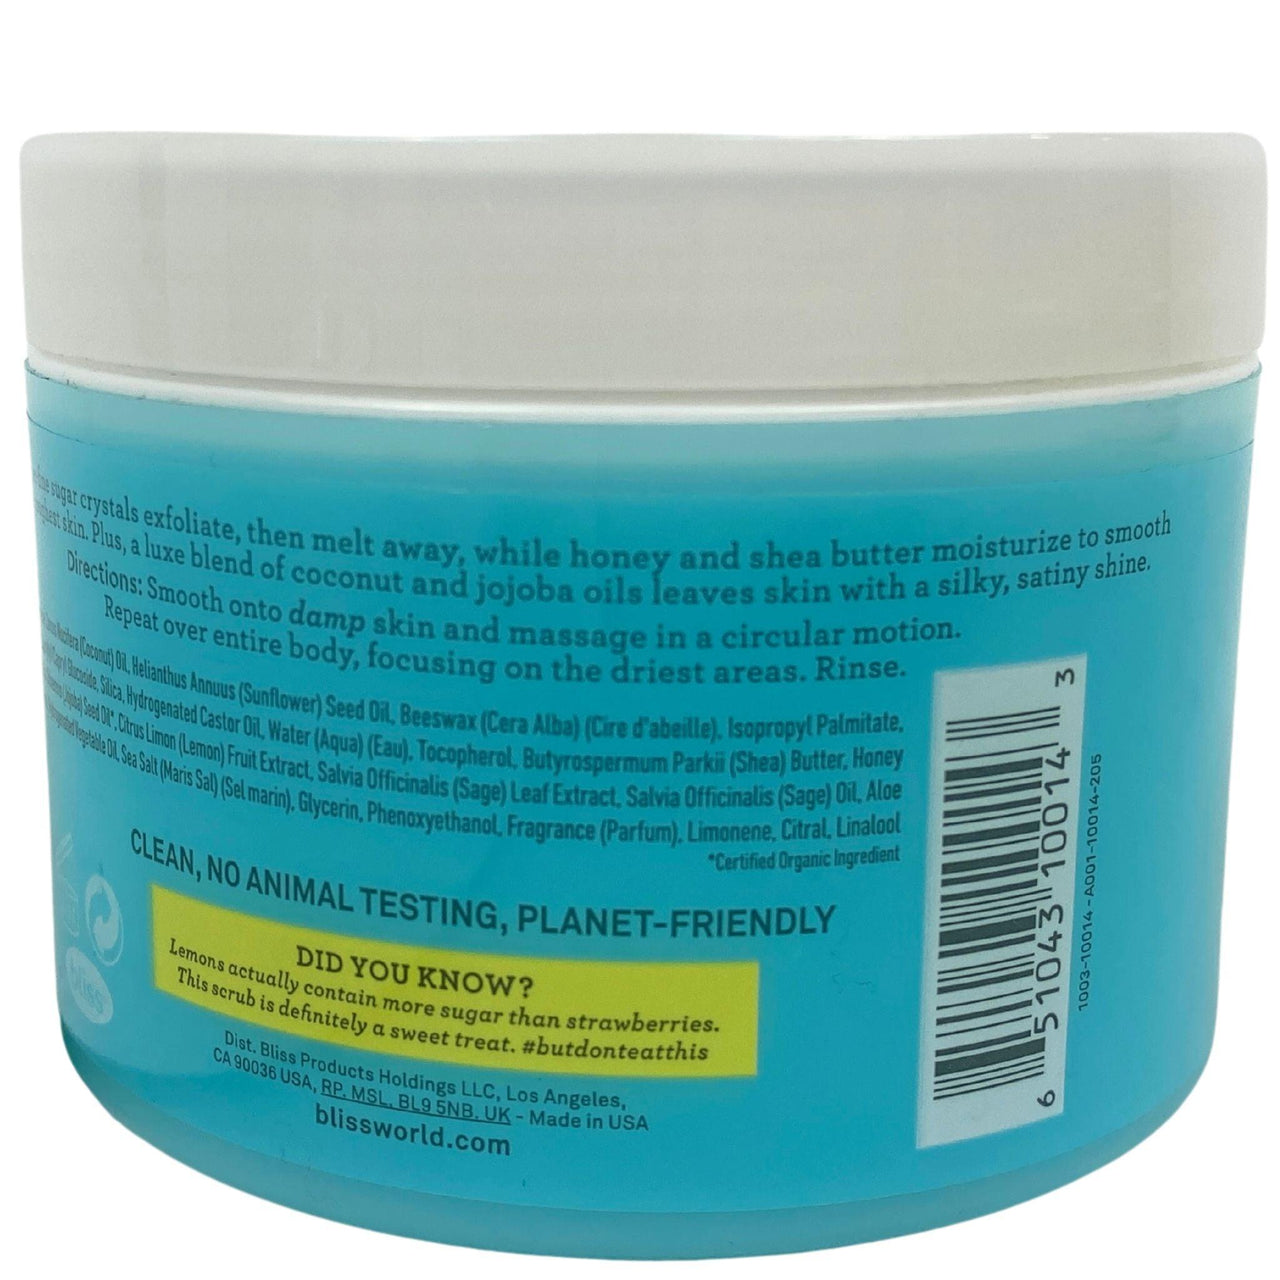 Bliss Lemon & Sage Satin Skin Body Polish with shea butter & coconut oil 8.5oz (50 Pcs Lot) - Discount Wholesalers Inc